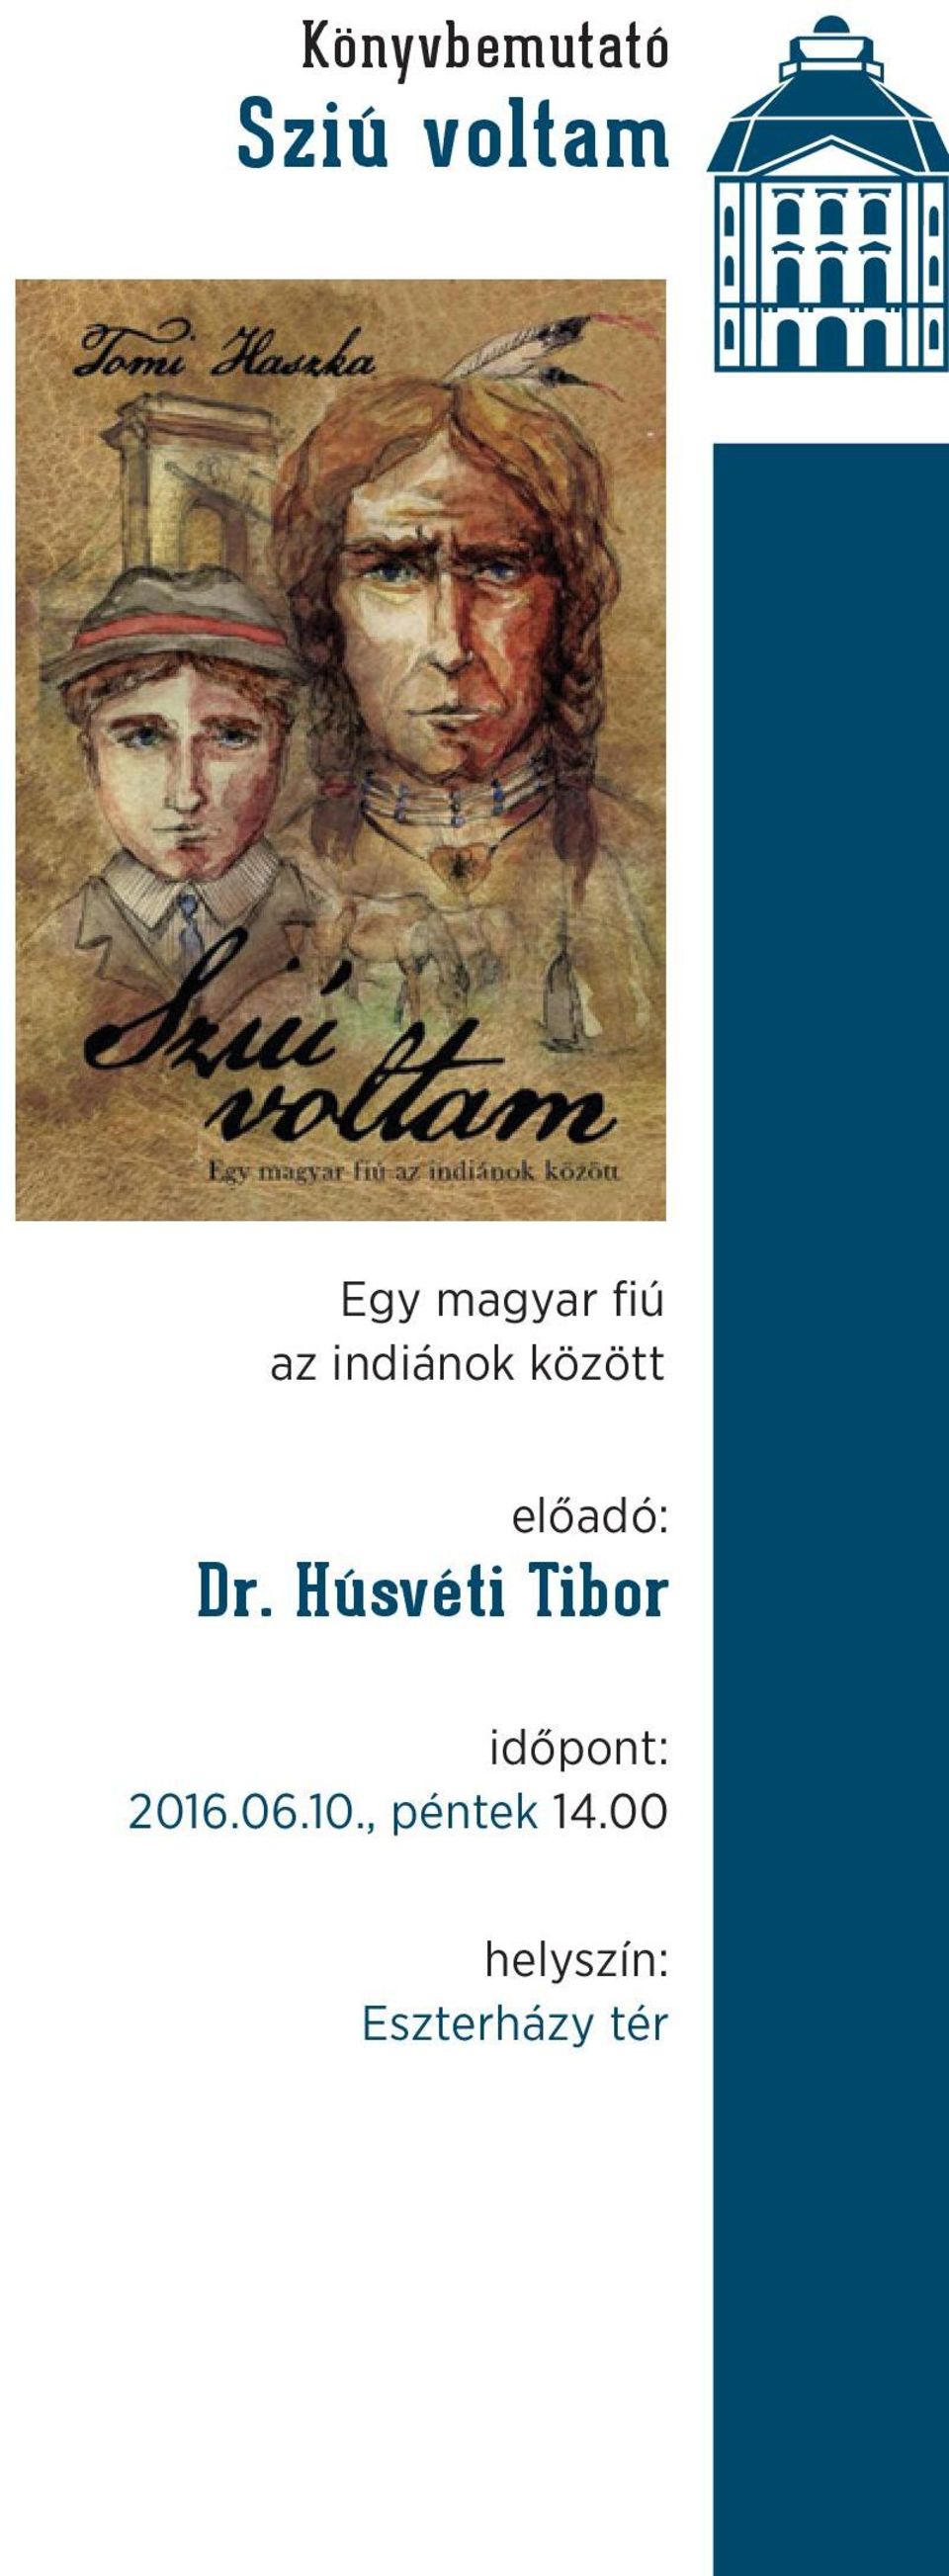 Húsvéti Tibor időpont: 2016.06.10.